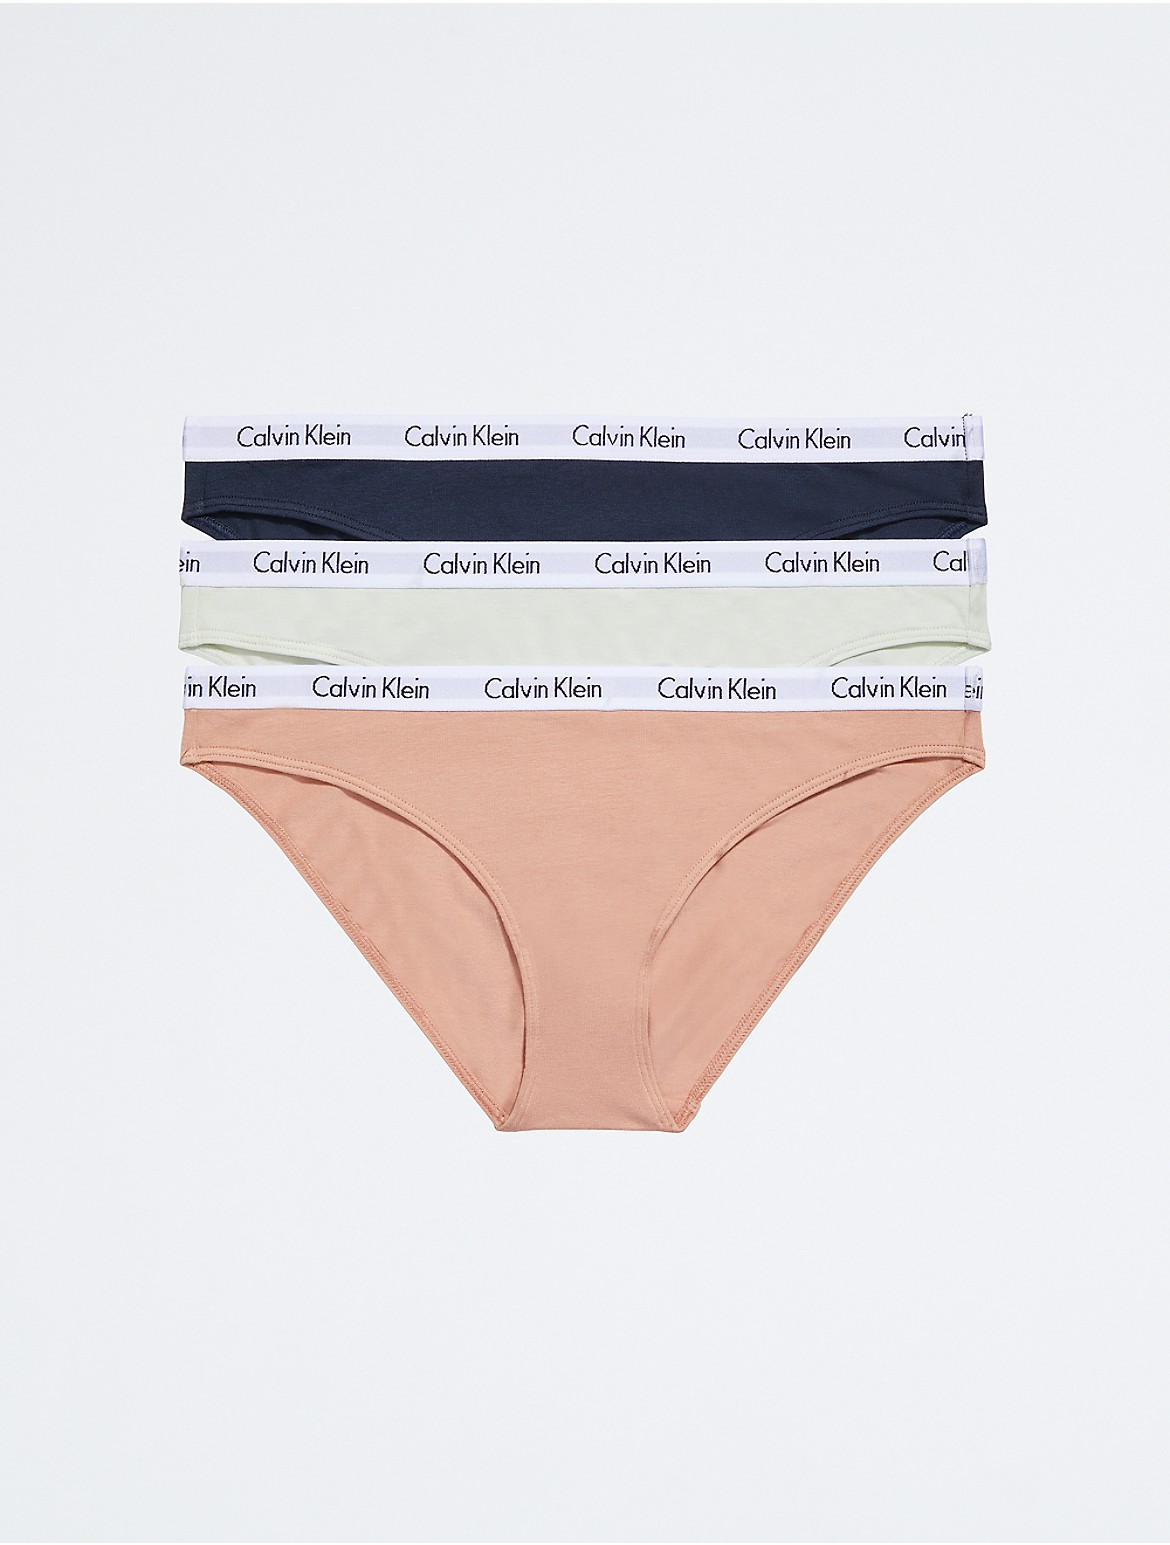 Calvin Klein Women's Carousel Logo Cotton 3-Pack Bikini - Multi - L